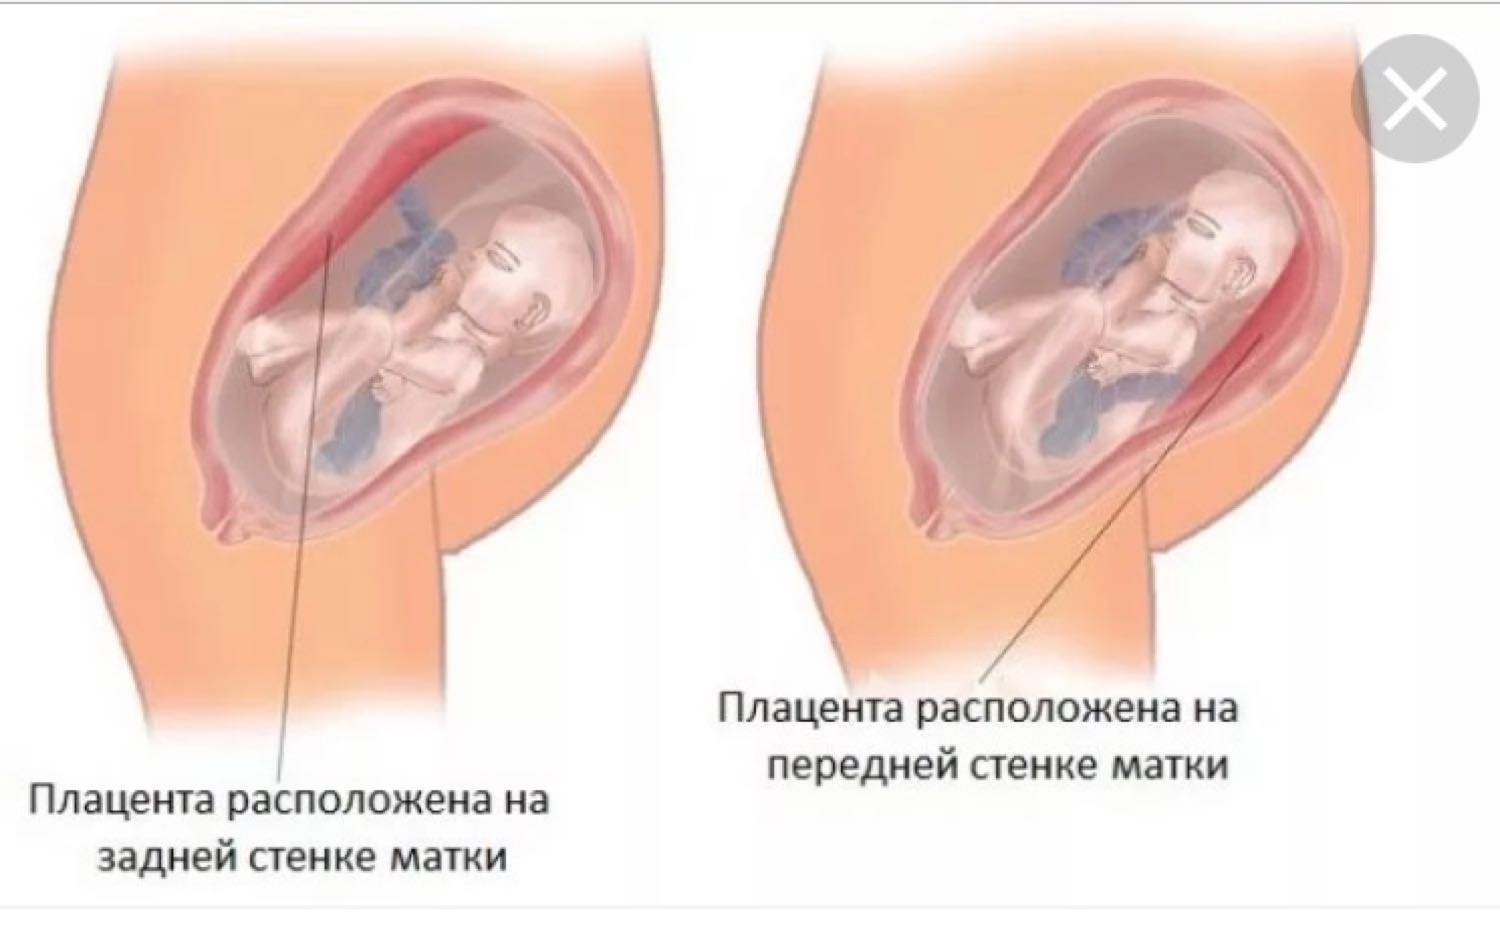 оргазм и гипертонус матки при беременности фото 19